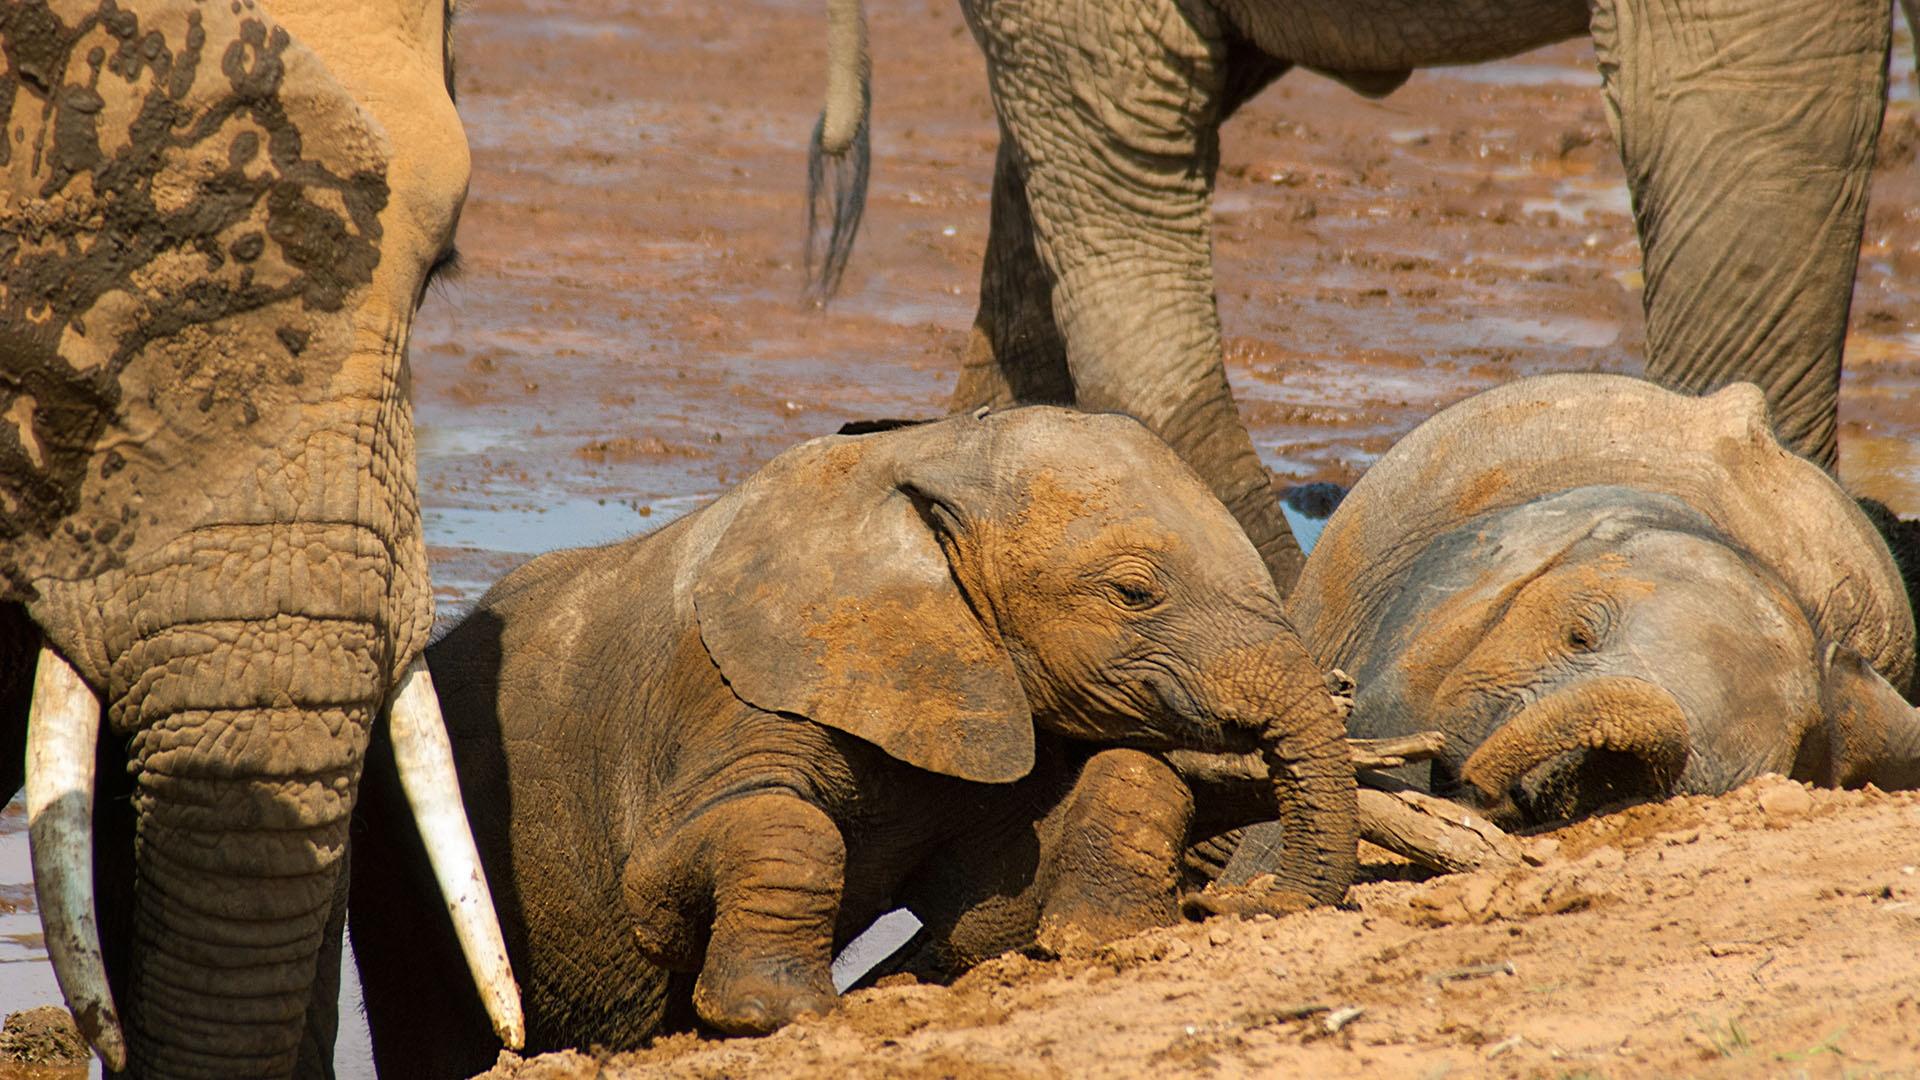 Young elephants wallowing in mud in Samburu National Park, Kenya.